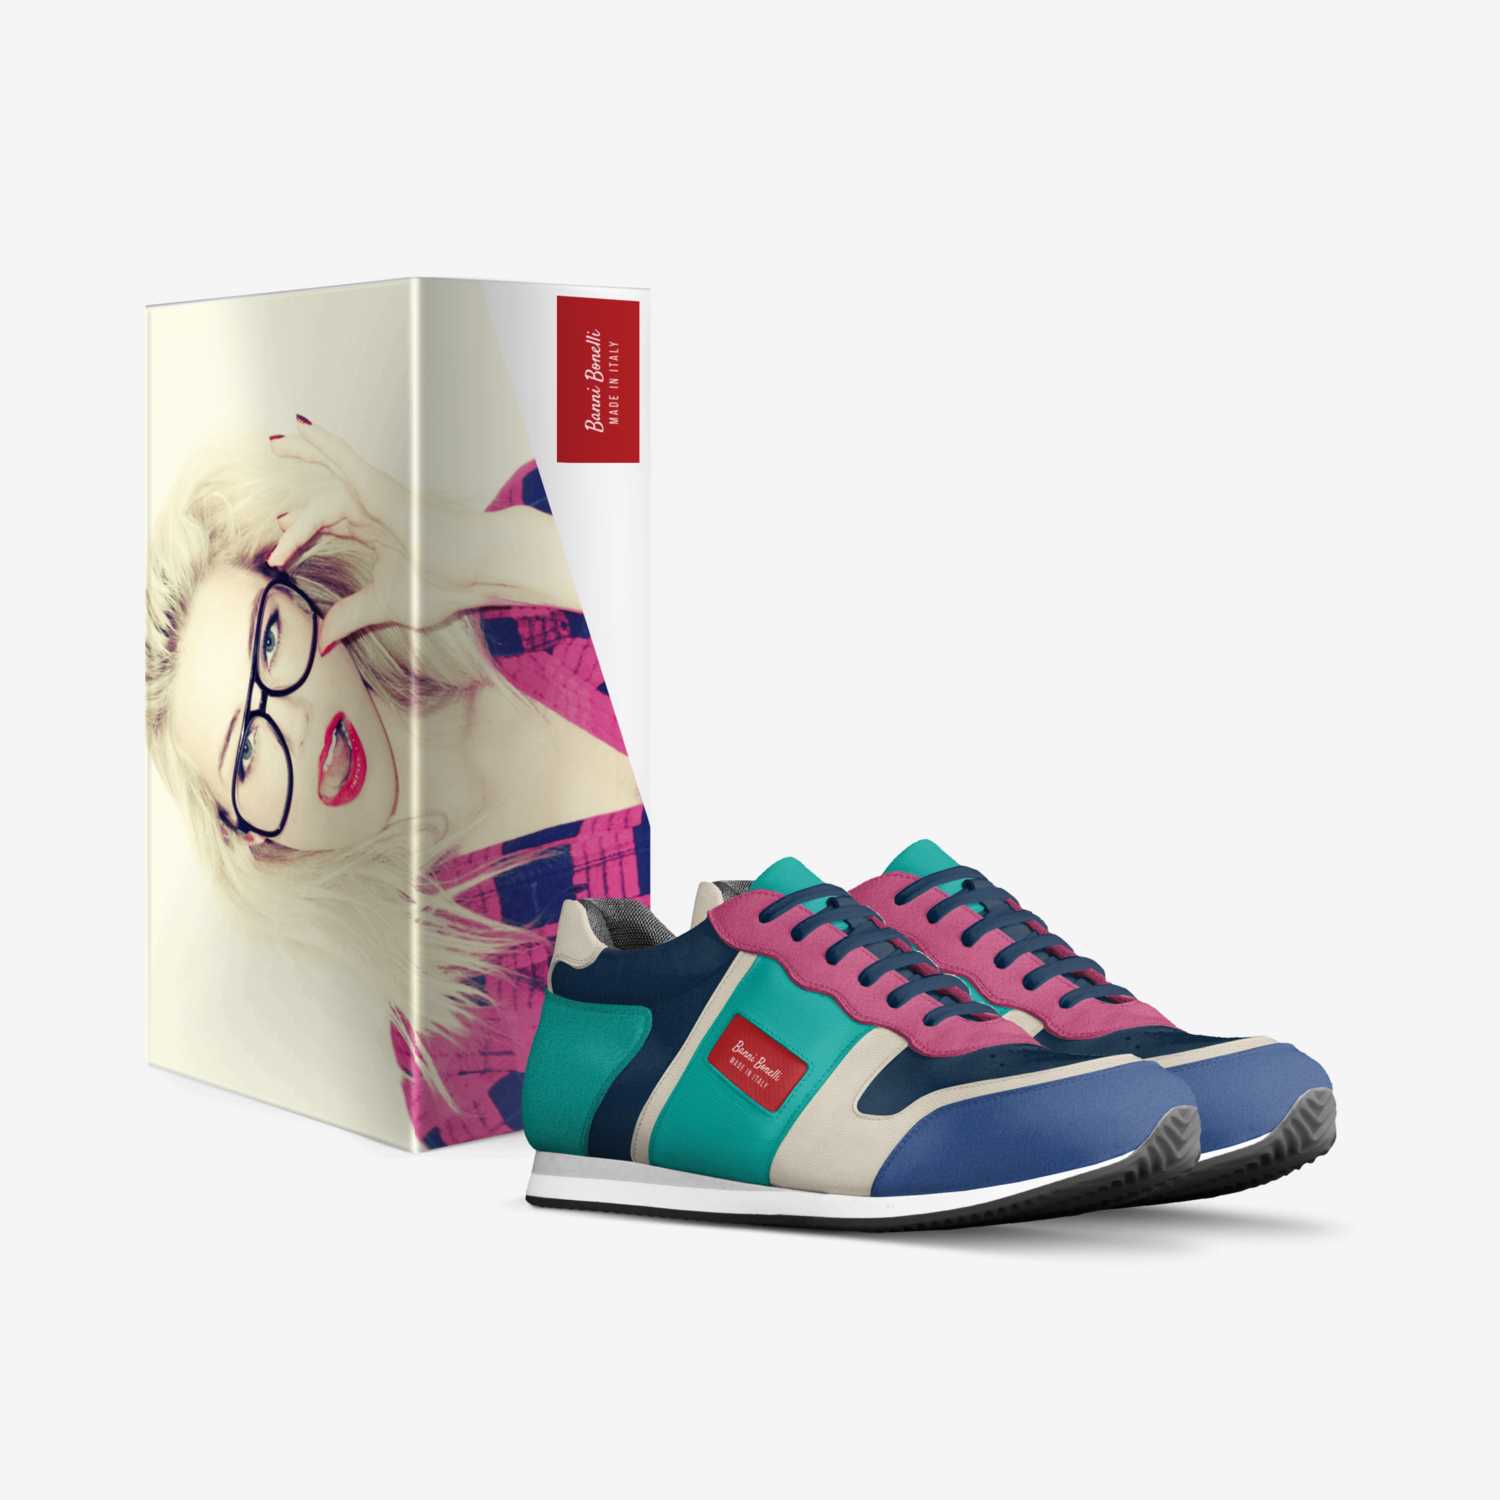 Softees custom made in Italy shoes by Nakiya Bennett | Box view